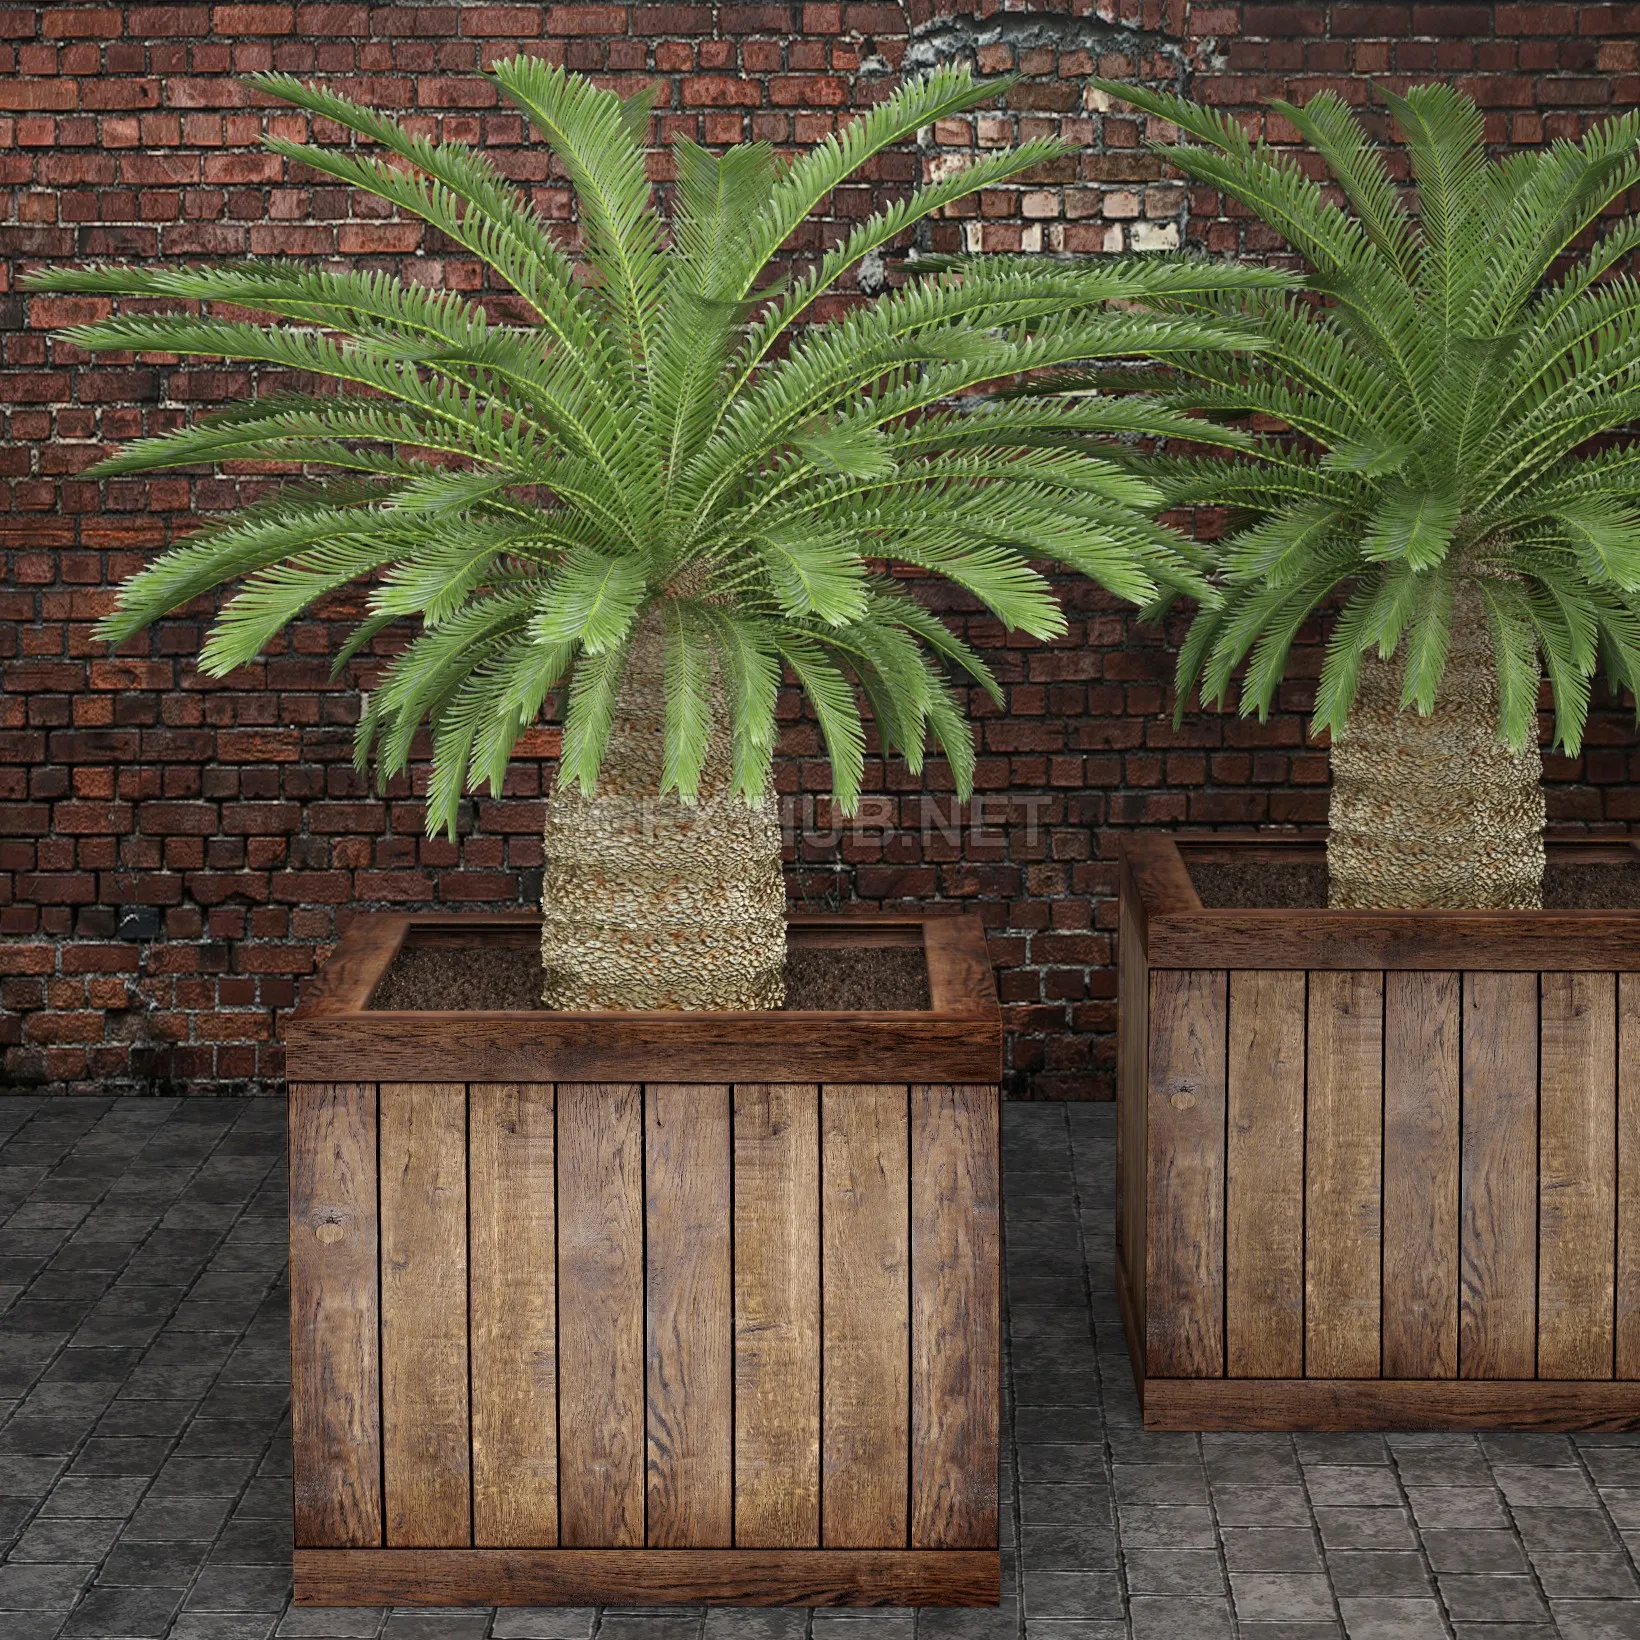 FURNITURE 3D MODELS – Palm tree